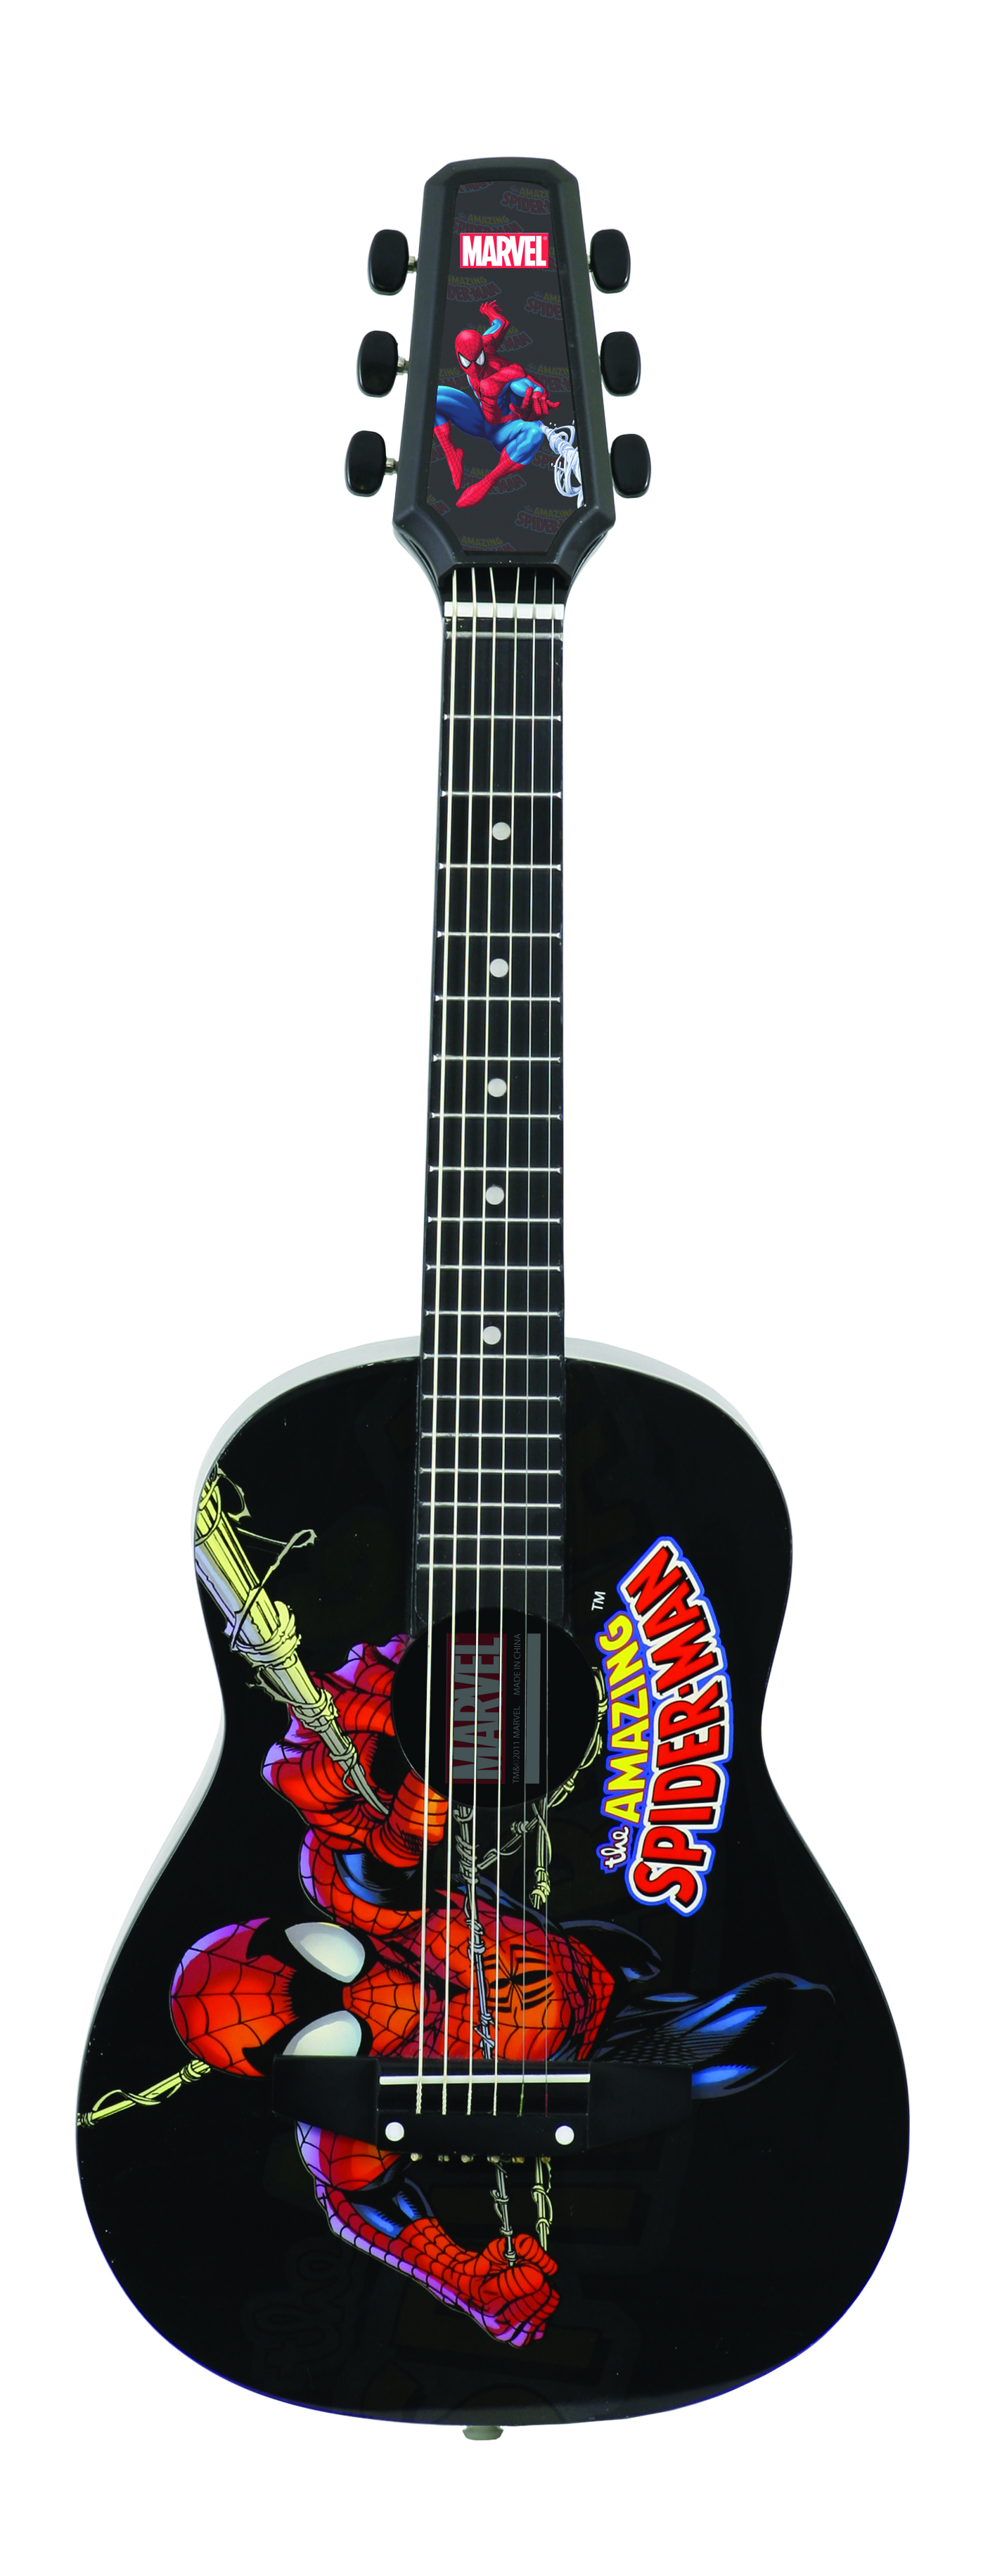 Total 74+ imagen the amazing spiderman guitar